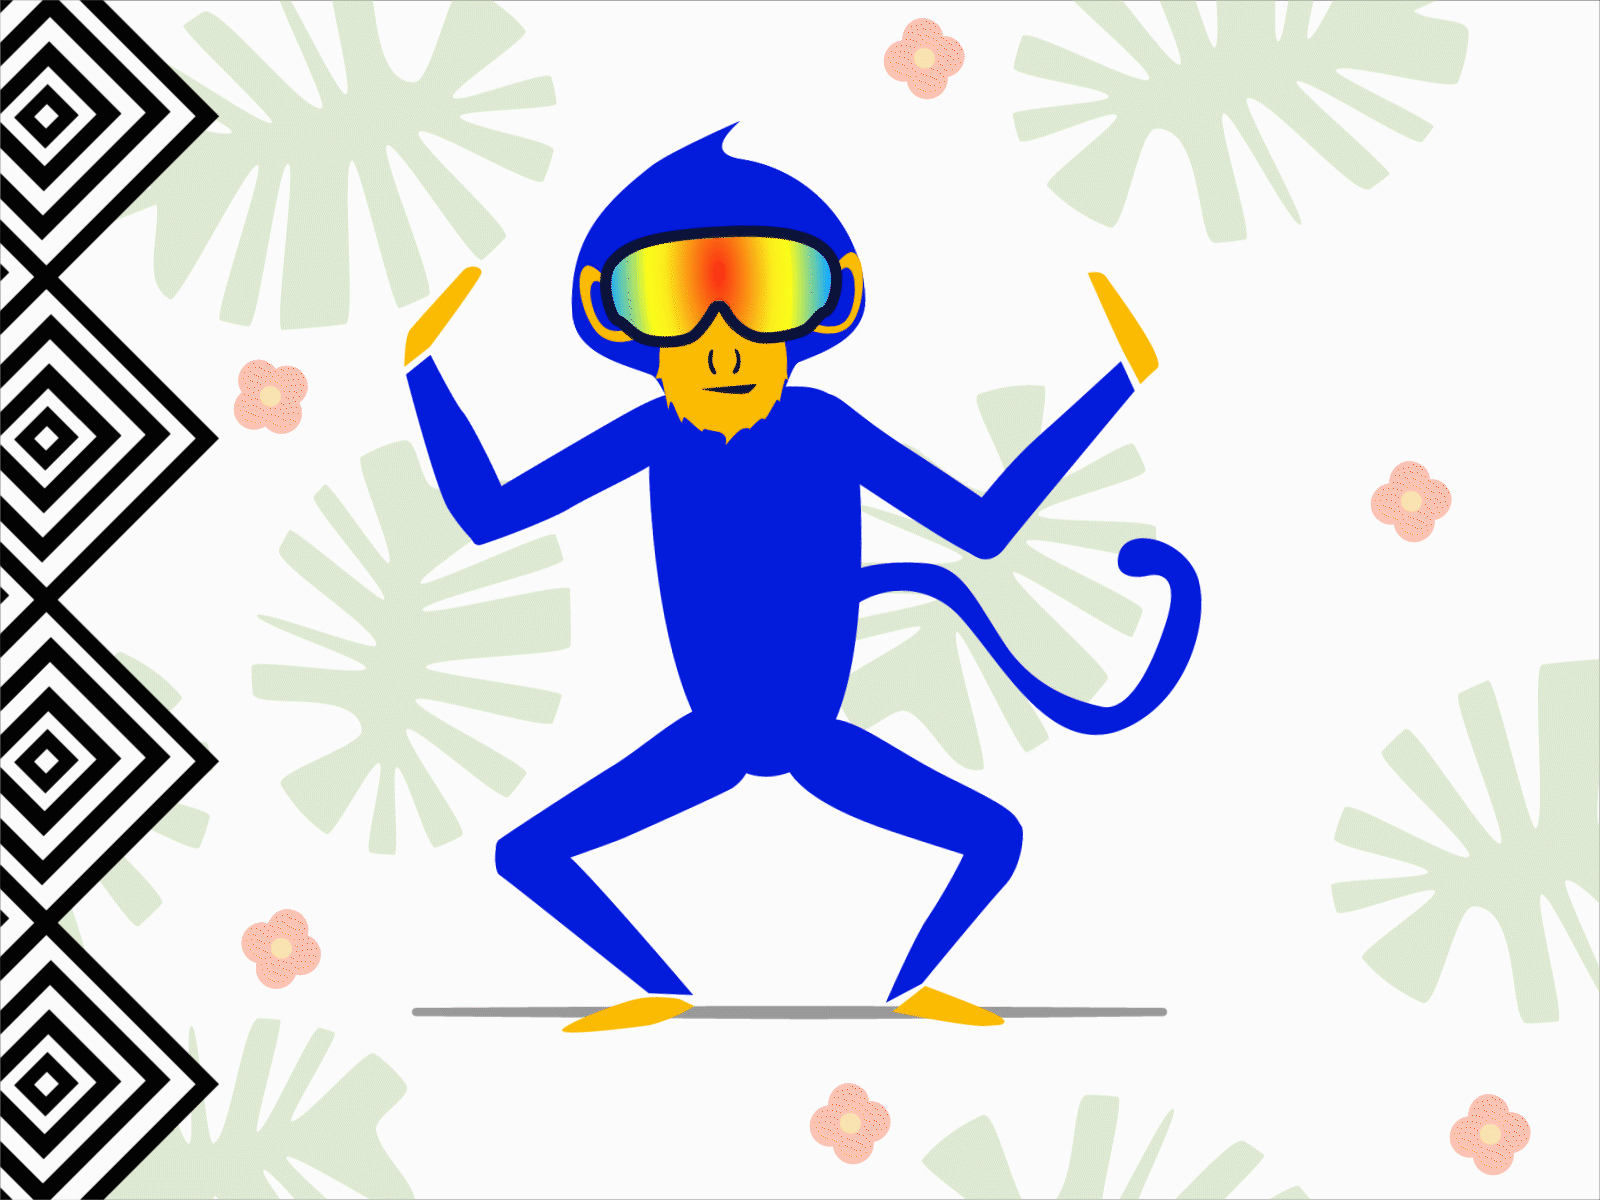 Dance Monkey 🐒 by Maria Sankina on Dribbble